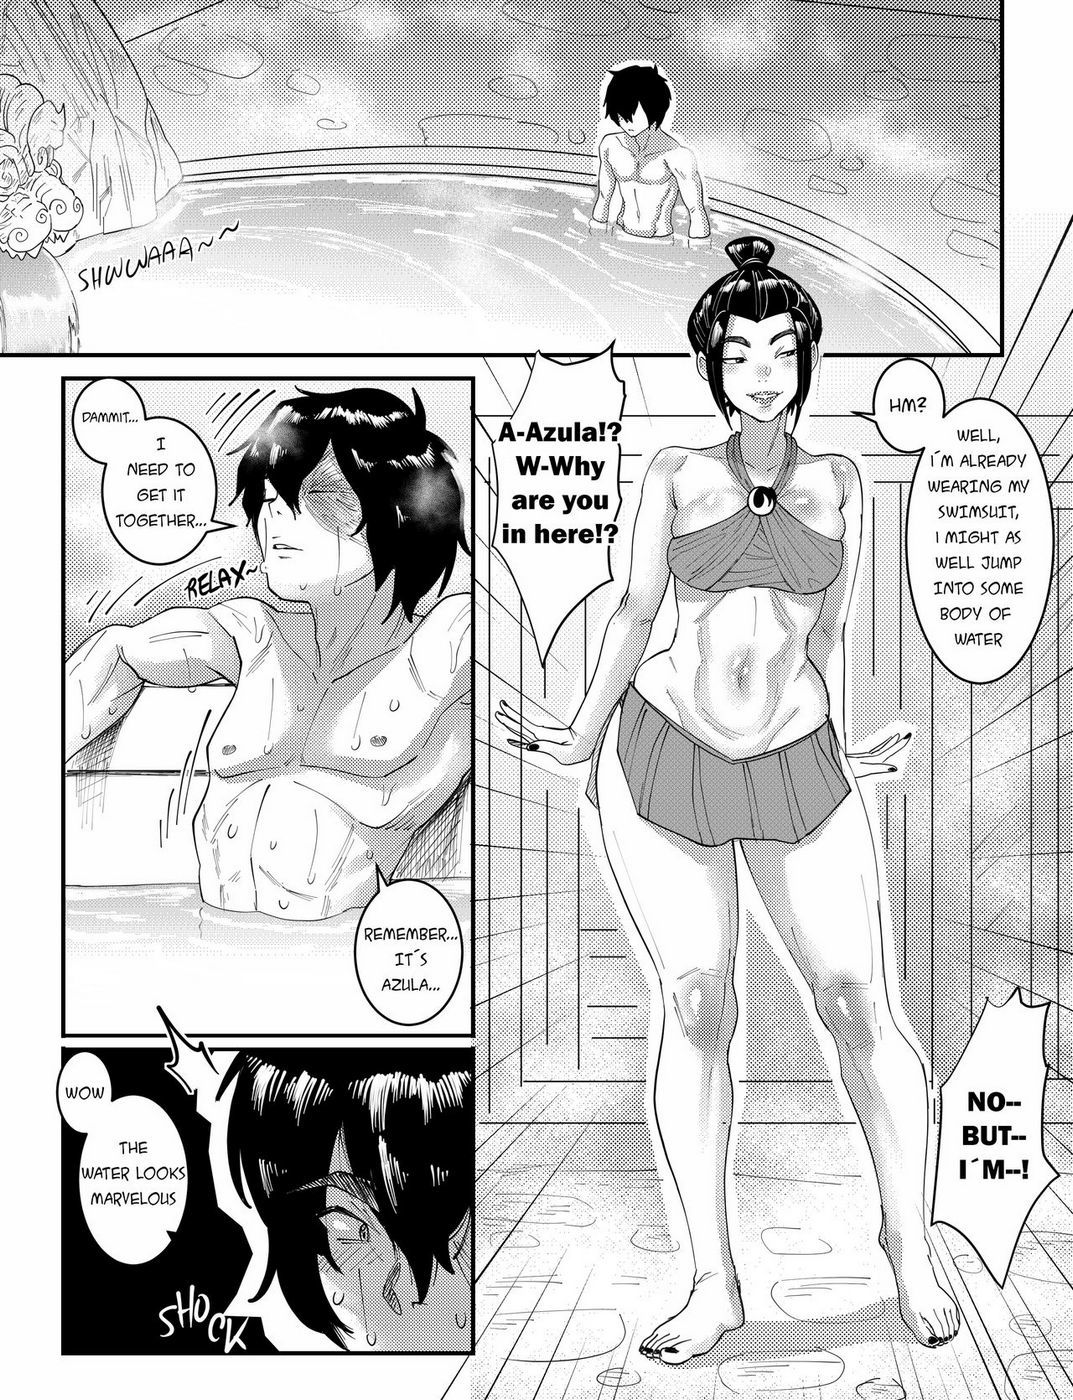 Rising Heat - Aarokira [Avatar: The Last Airbender] page 12